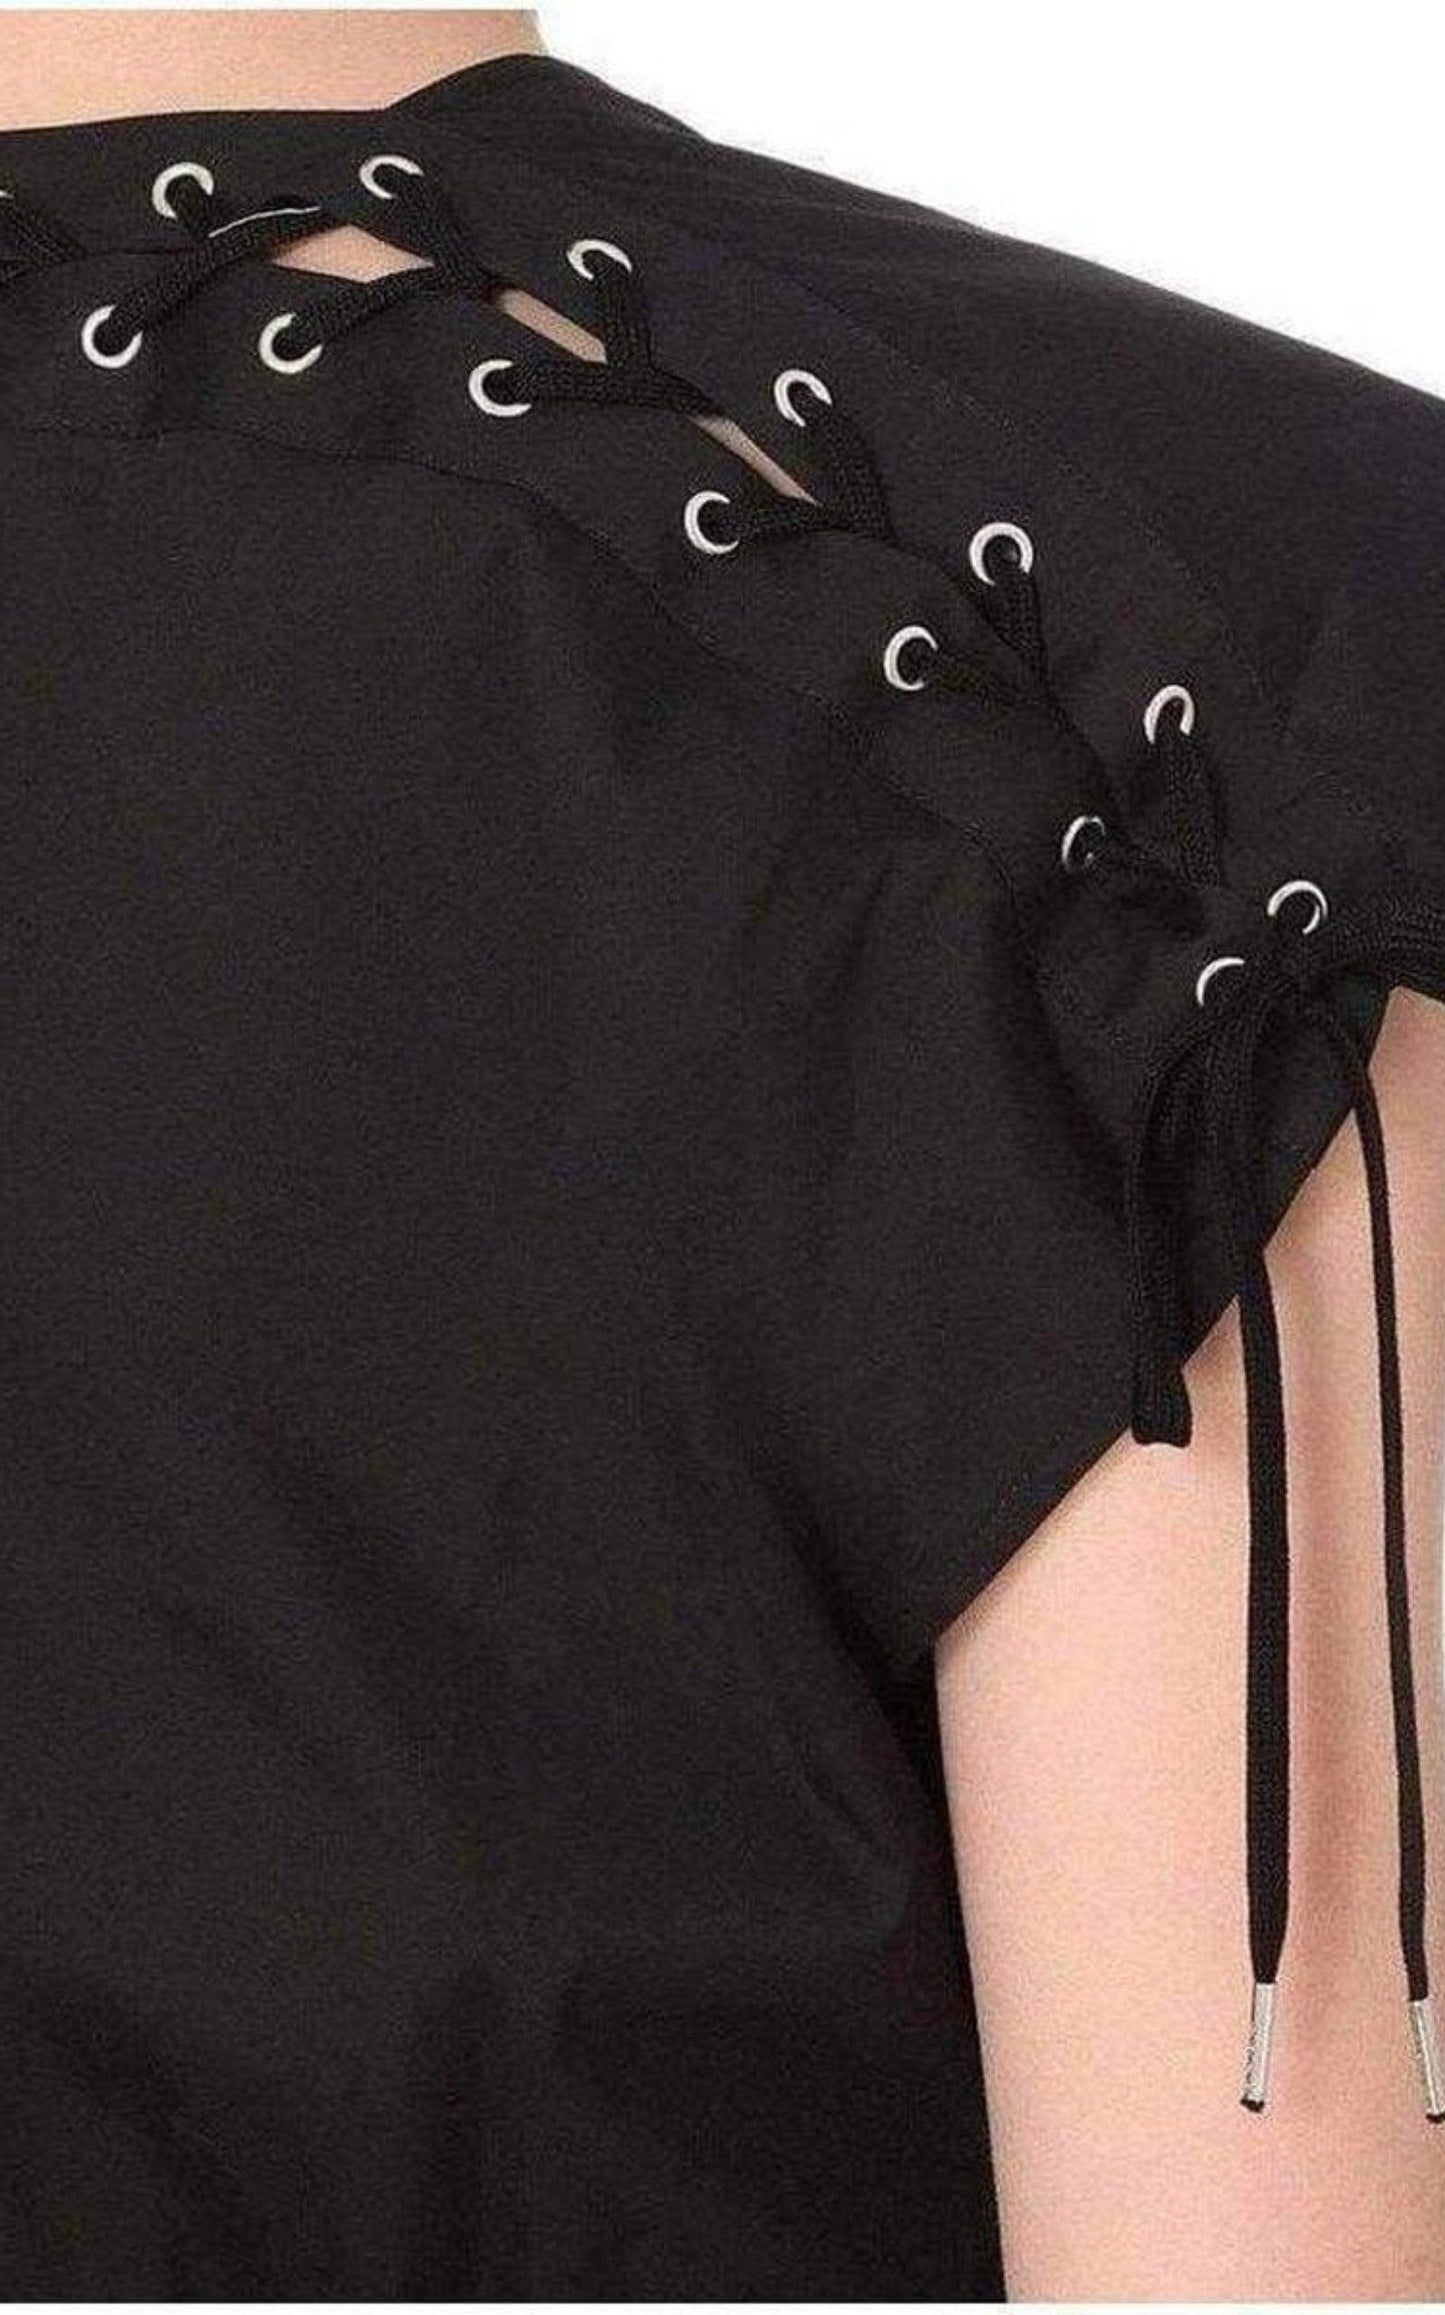  Jean Paul GaultierLace Up Panel Black Cotton Dress - Runway Catalog